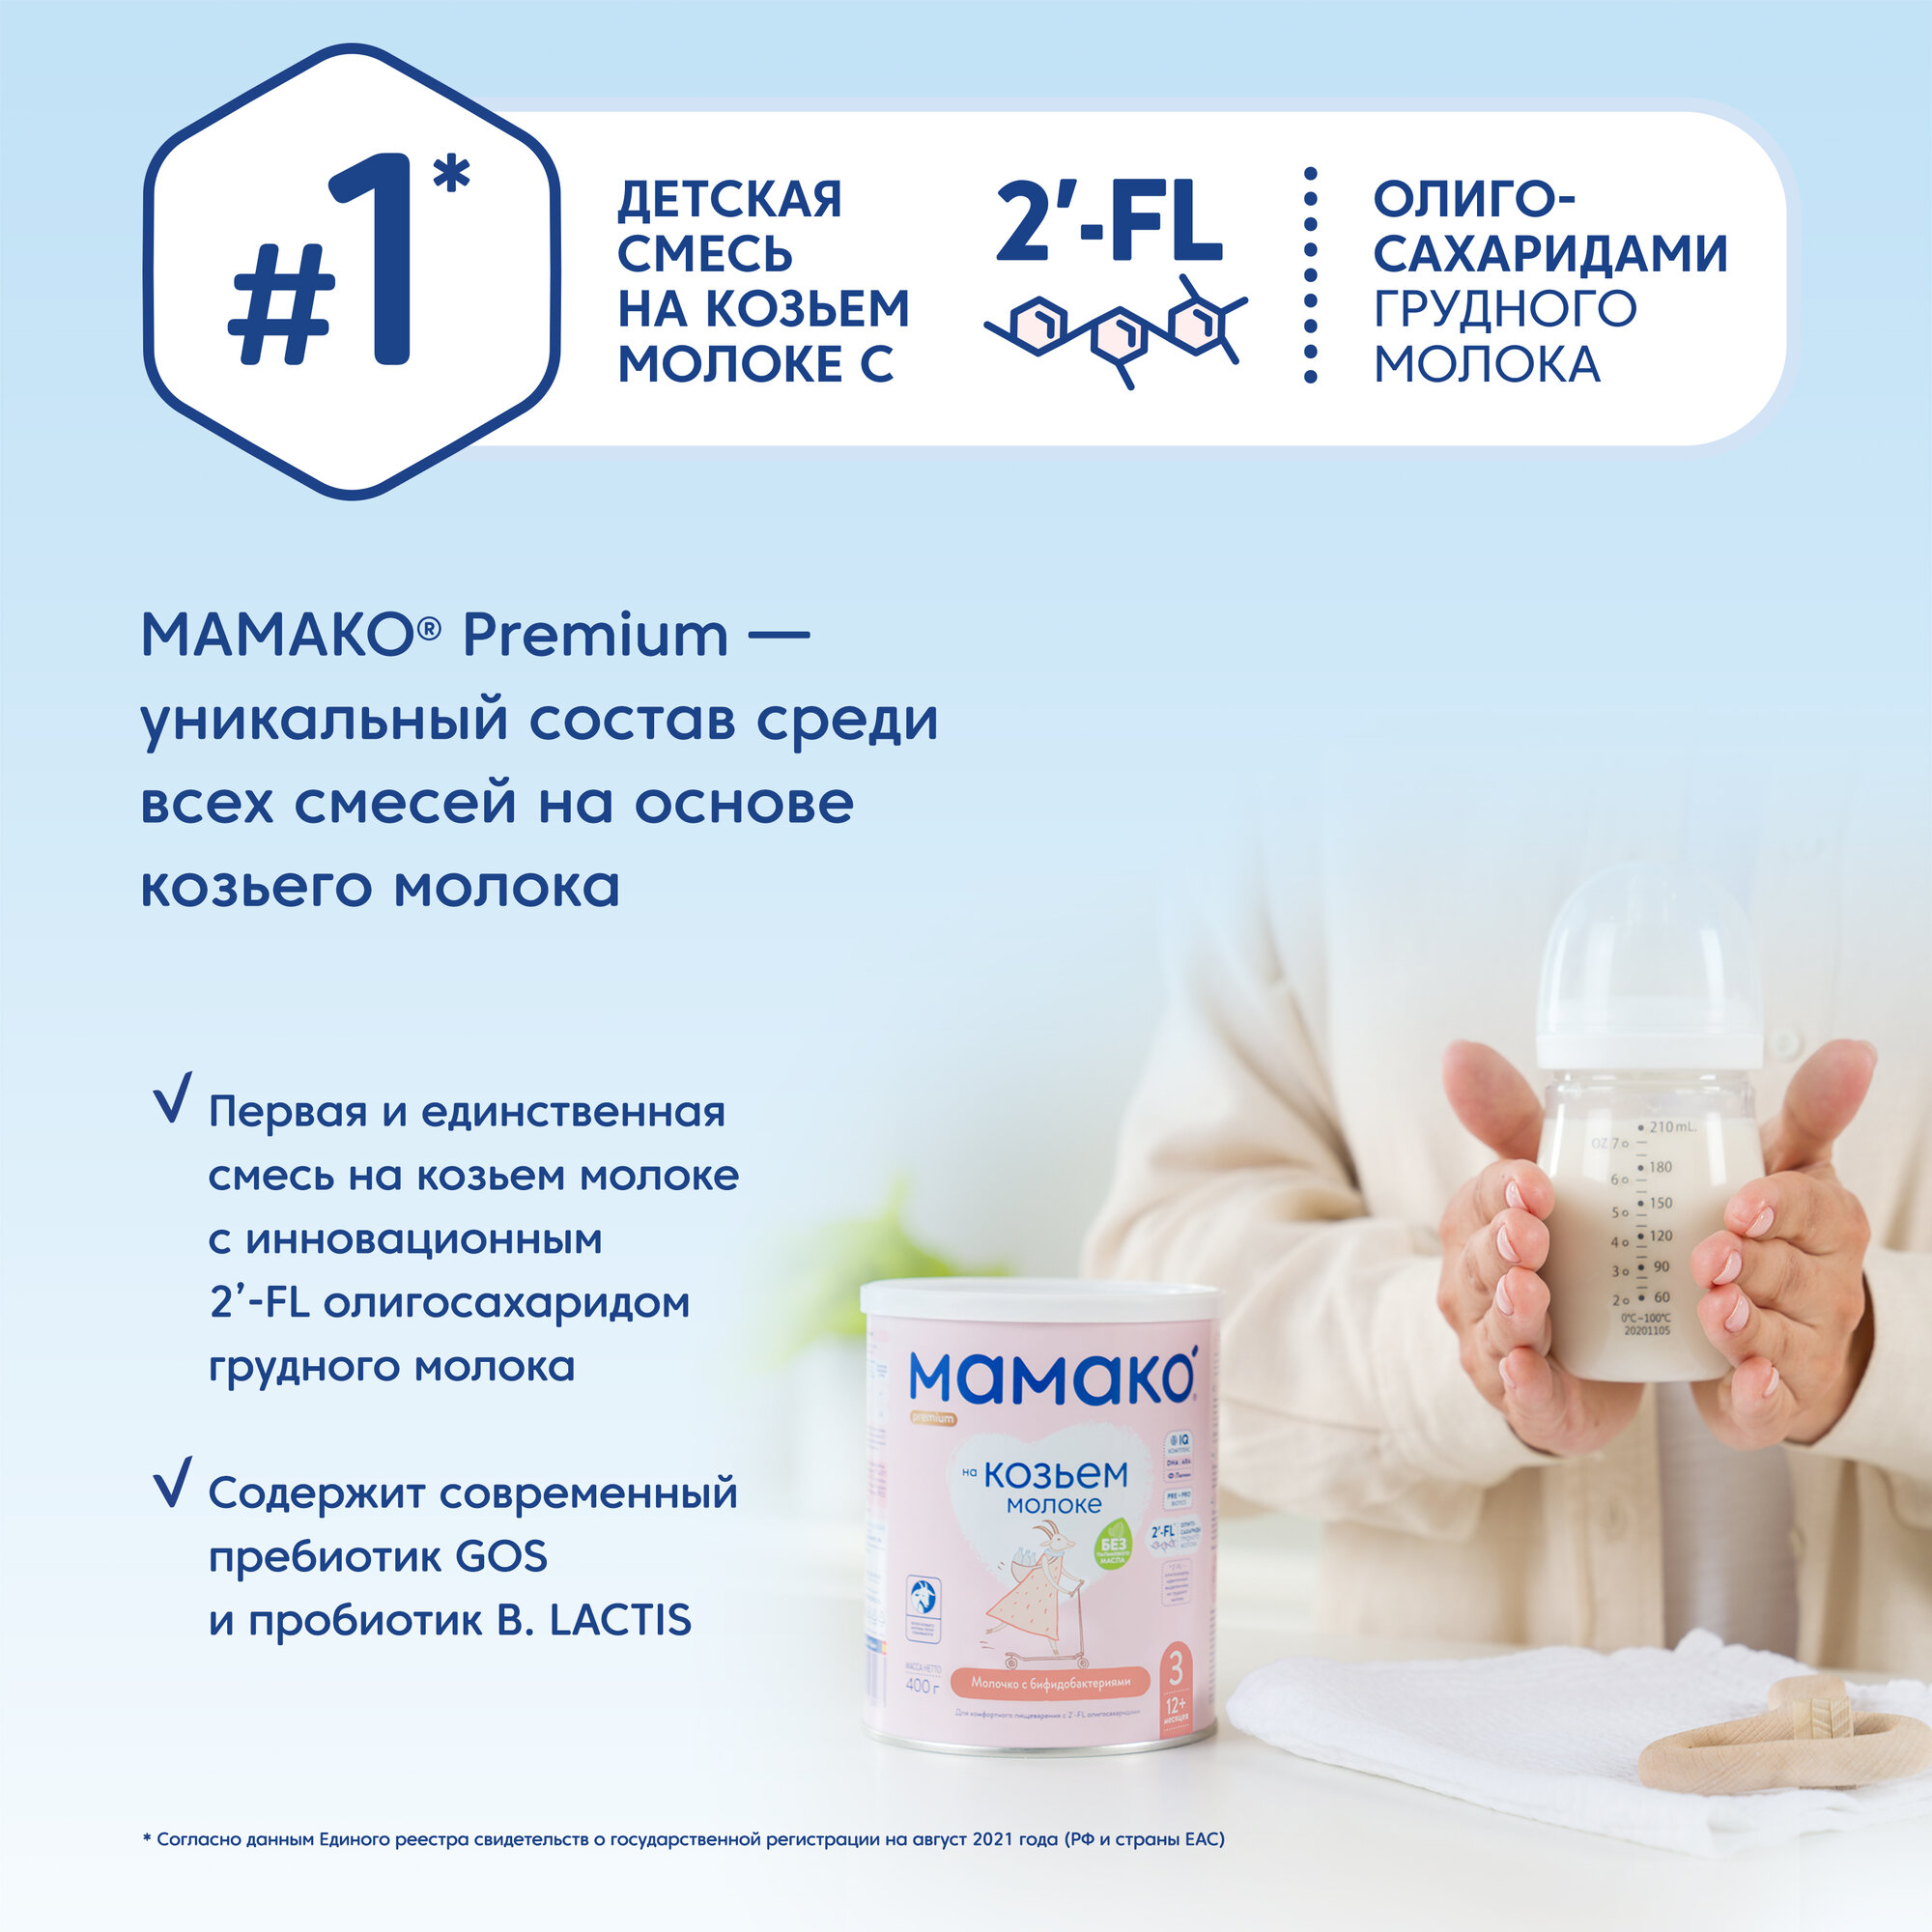 Молочный напиток Мамако на основе козьего молока - фото №4